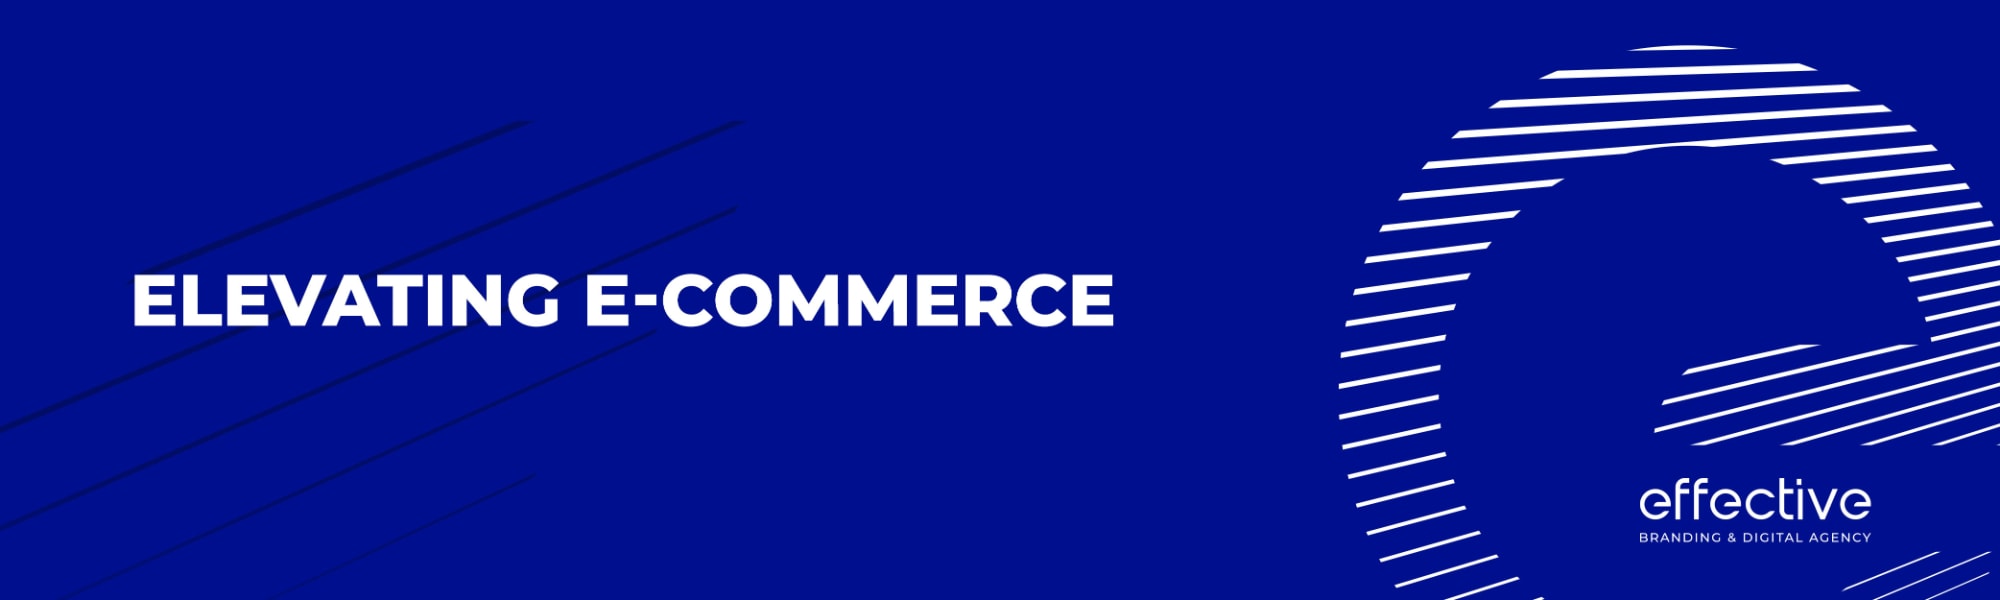 Elevating E-commerce